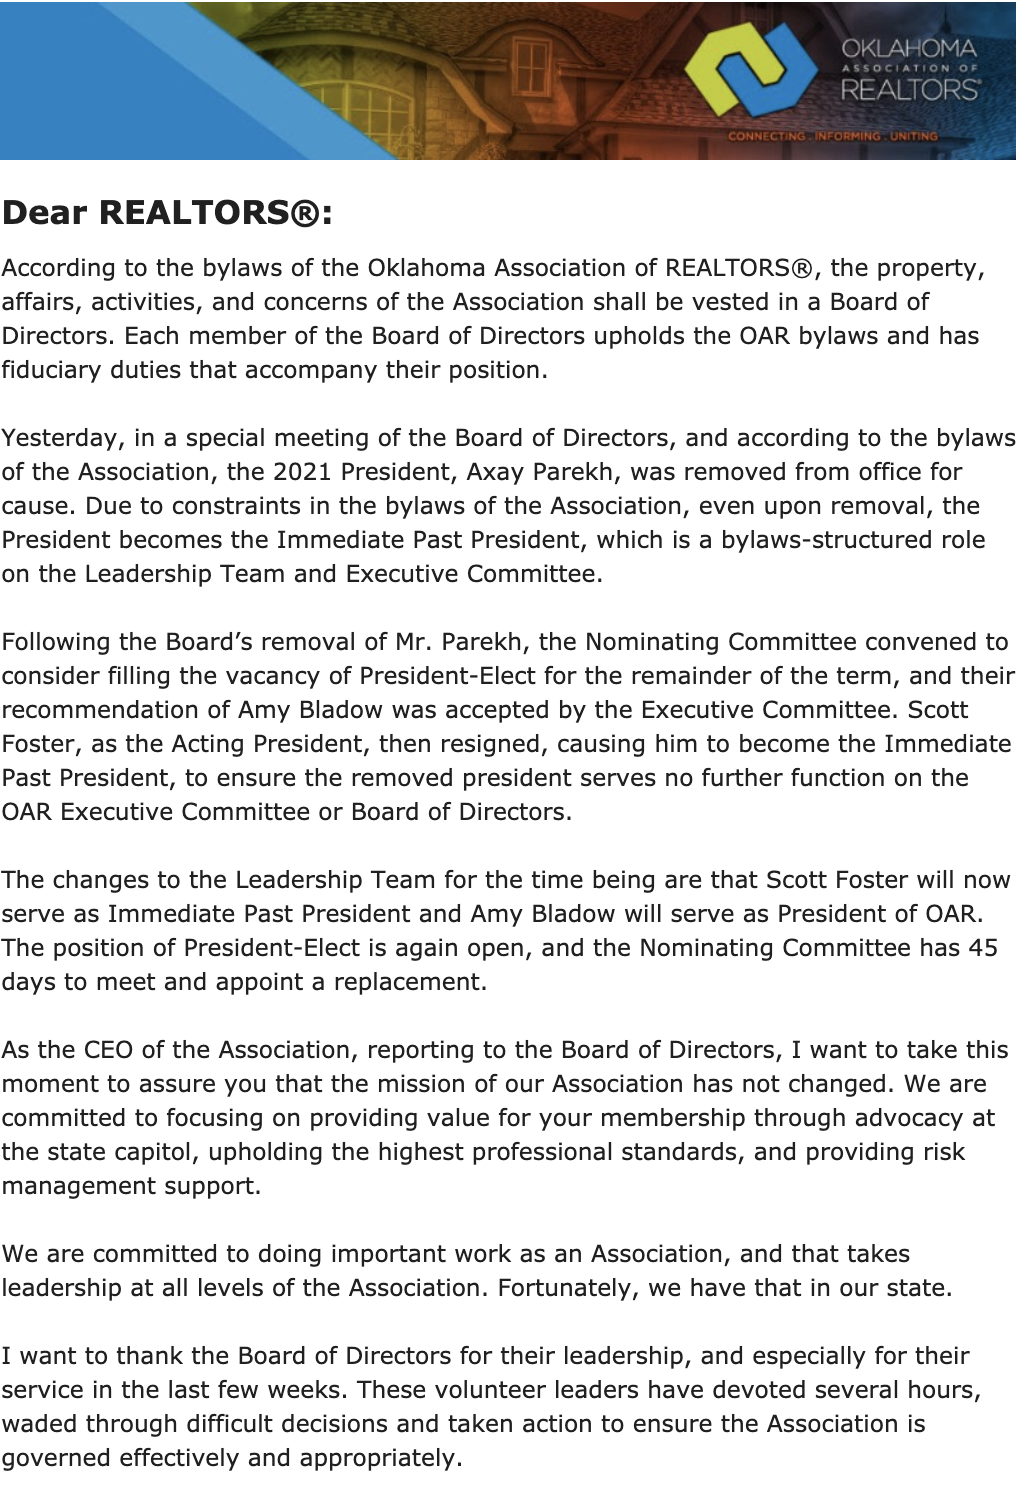 Oklahoma Association of Realtors President Ousted